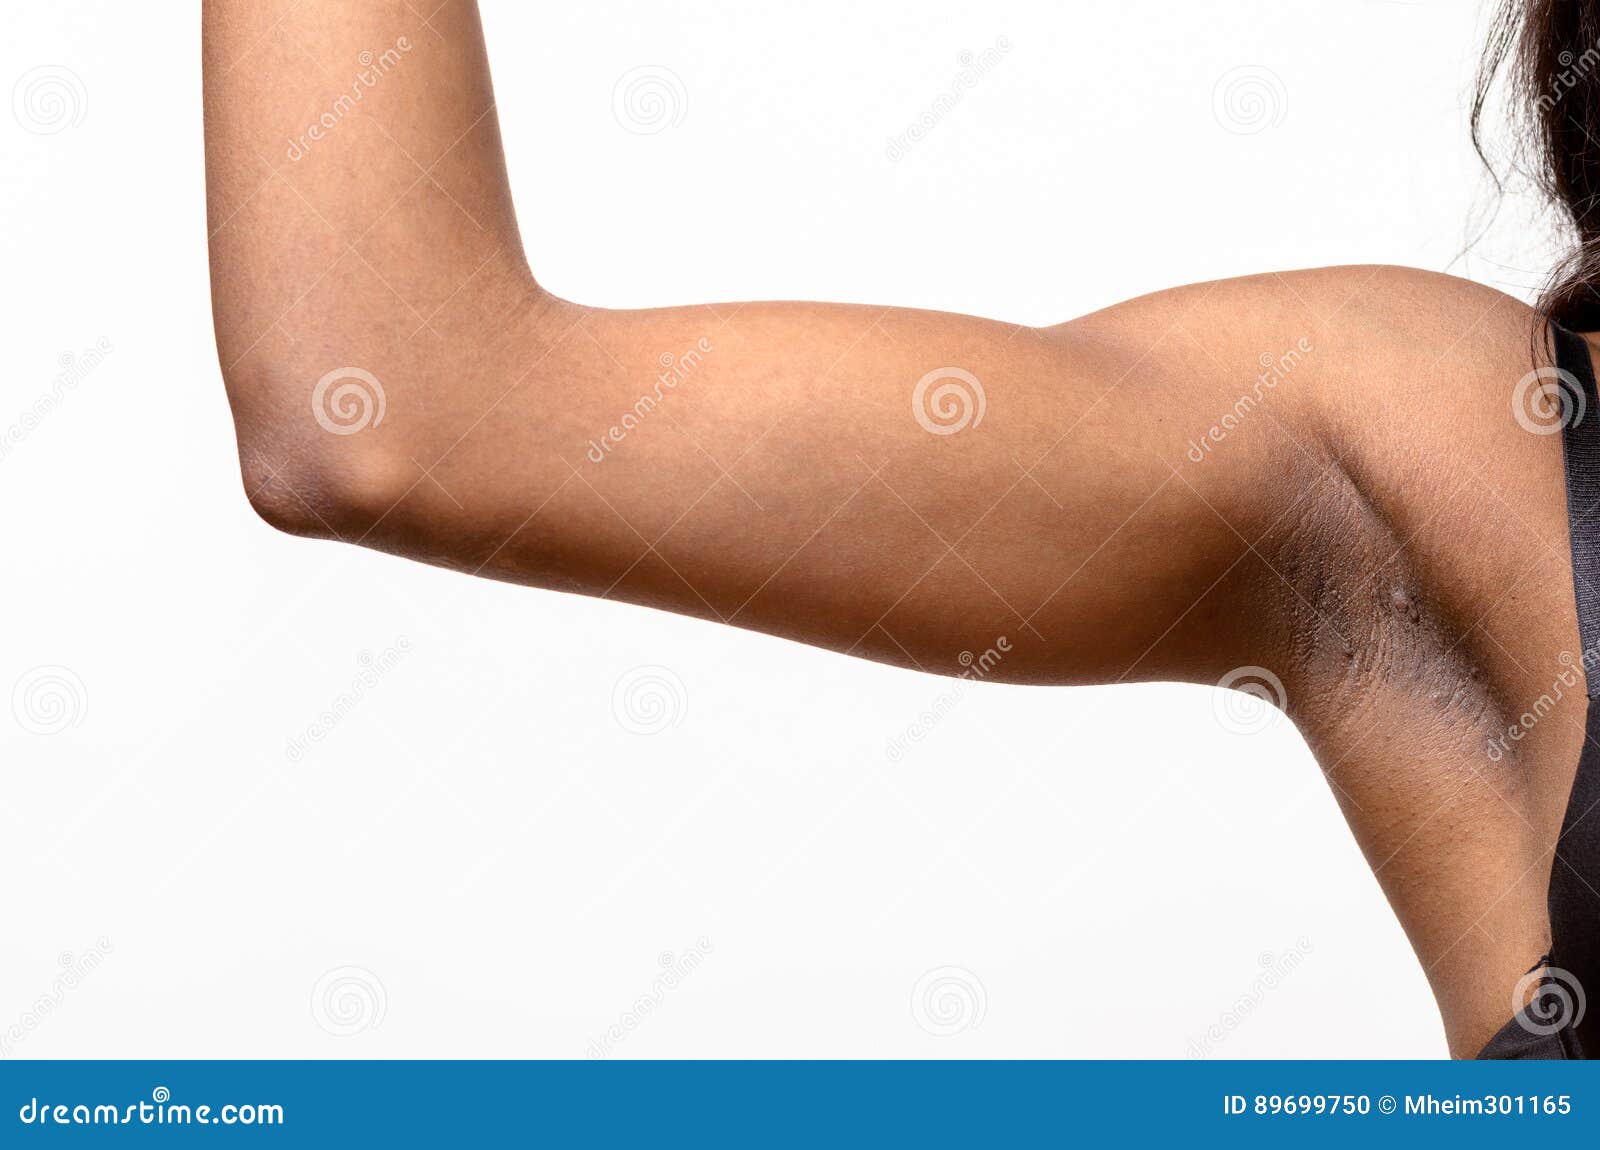 female muscular arm stock photos - OFFSET